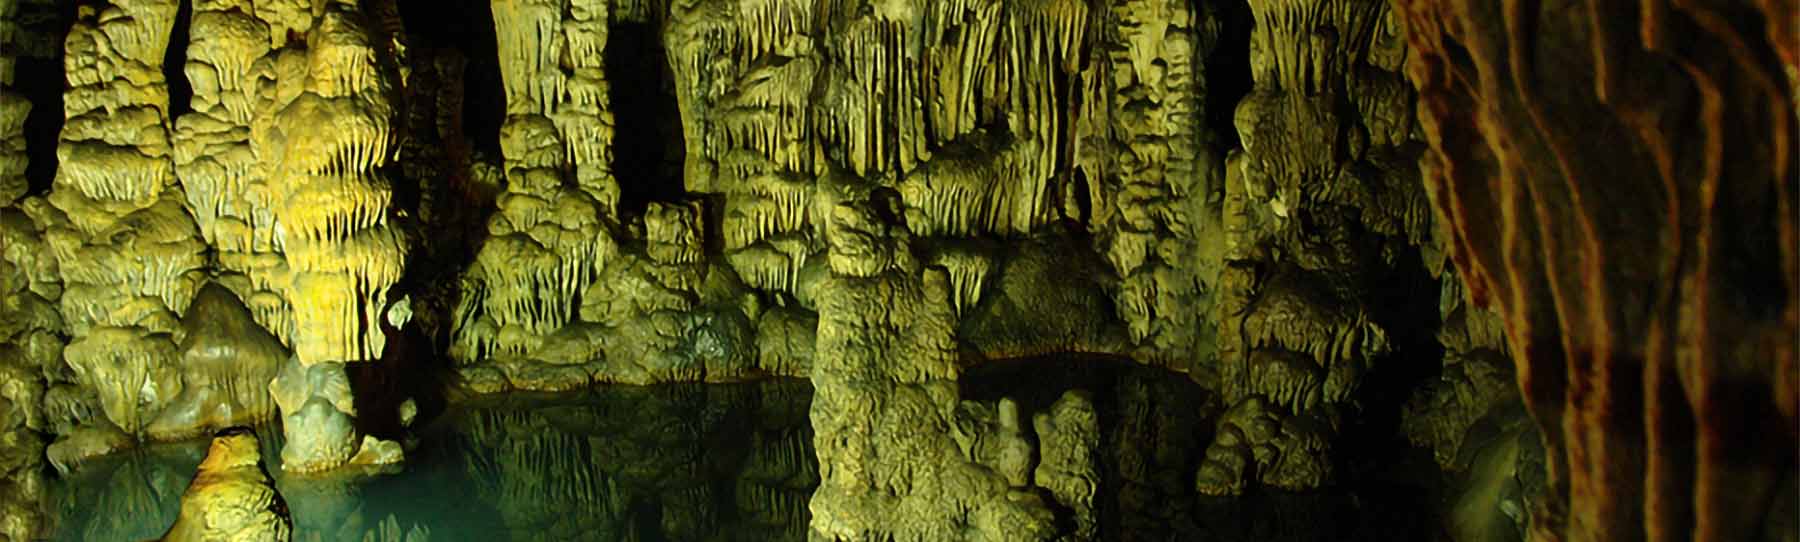 Nationaldenkmal Tropfsteinhöhle Melidoni auf der Insel Kreta